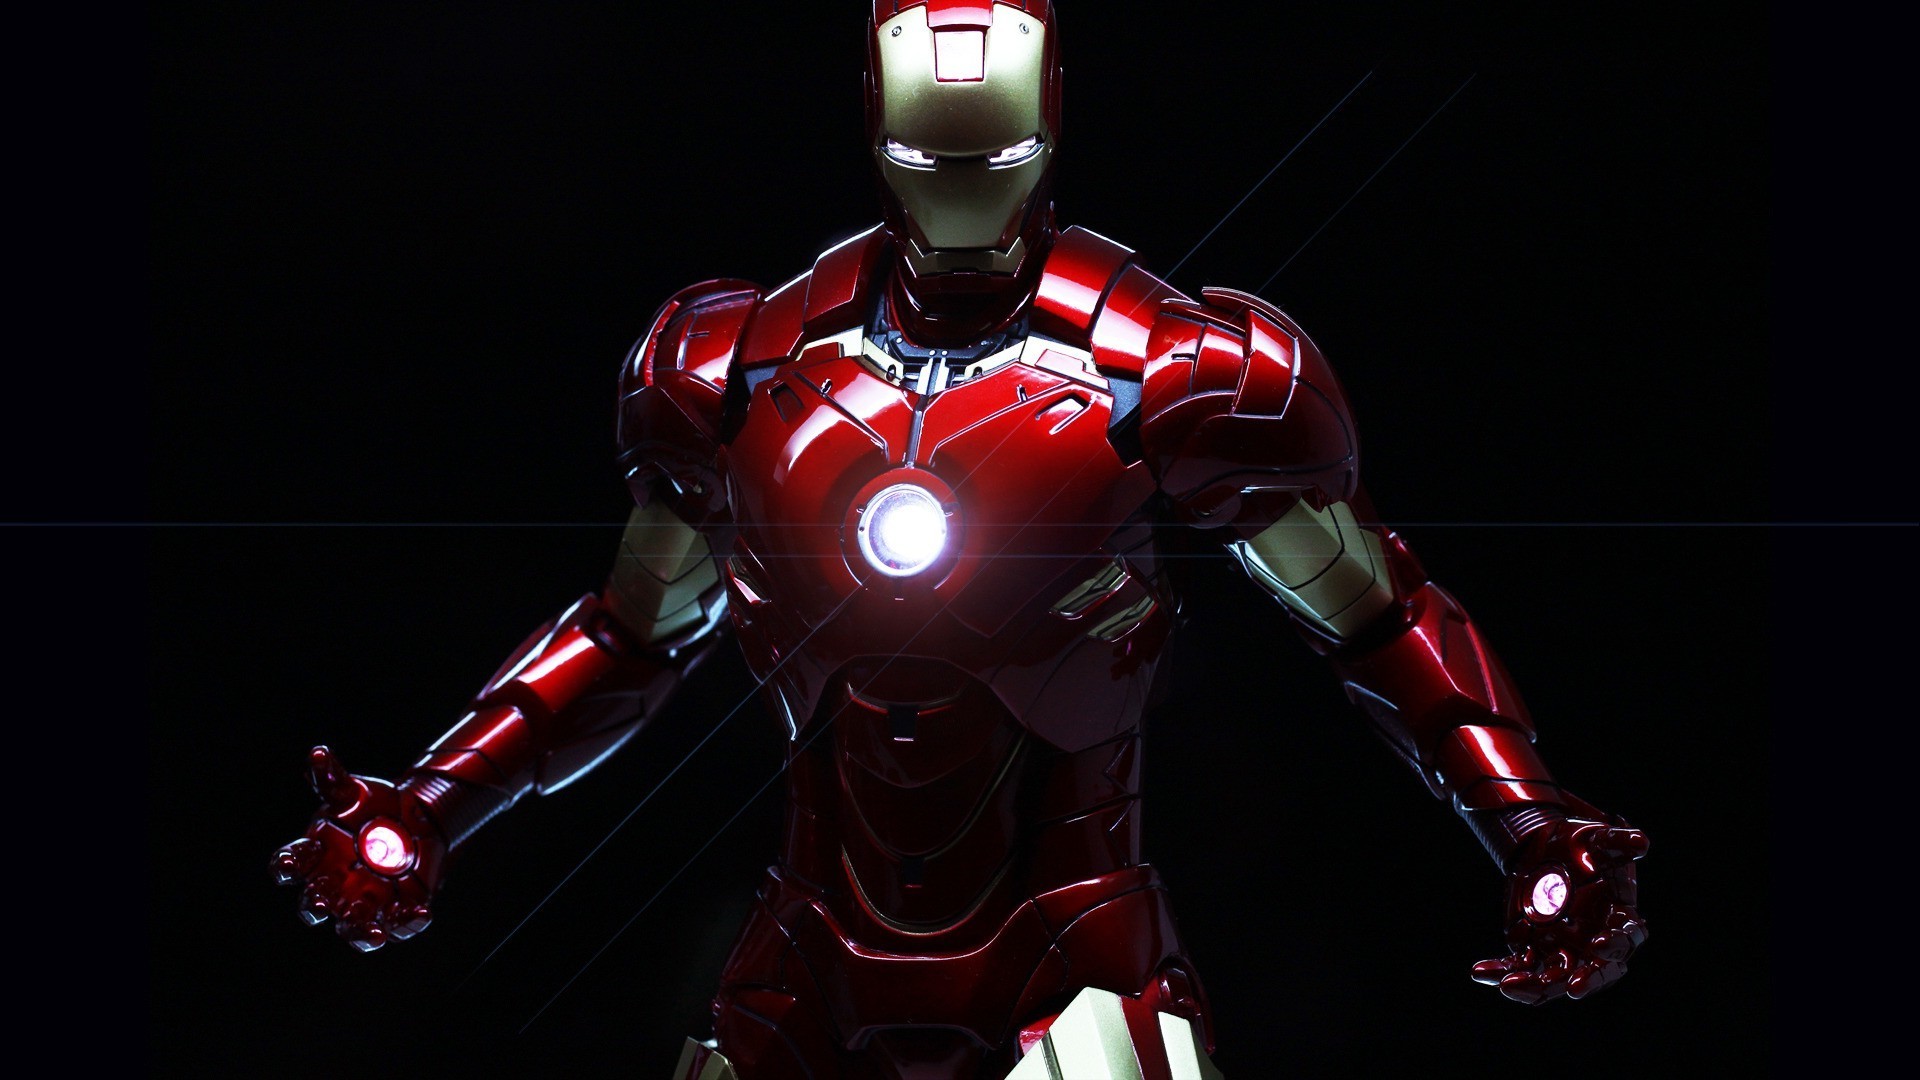 HD Best Iron Man Wallpapers for Desktop Full Size - HiReWallpapers ...